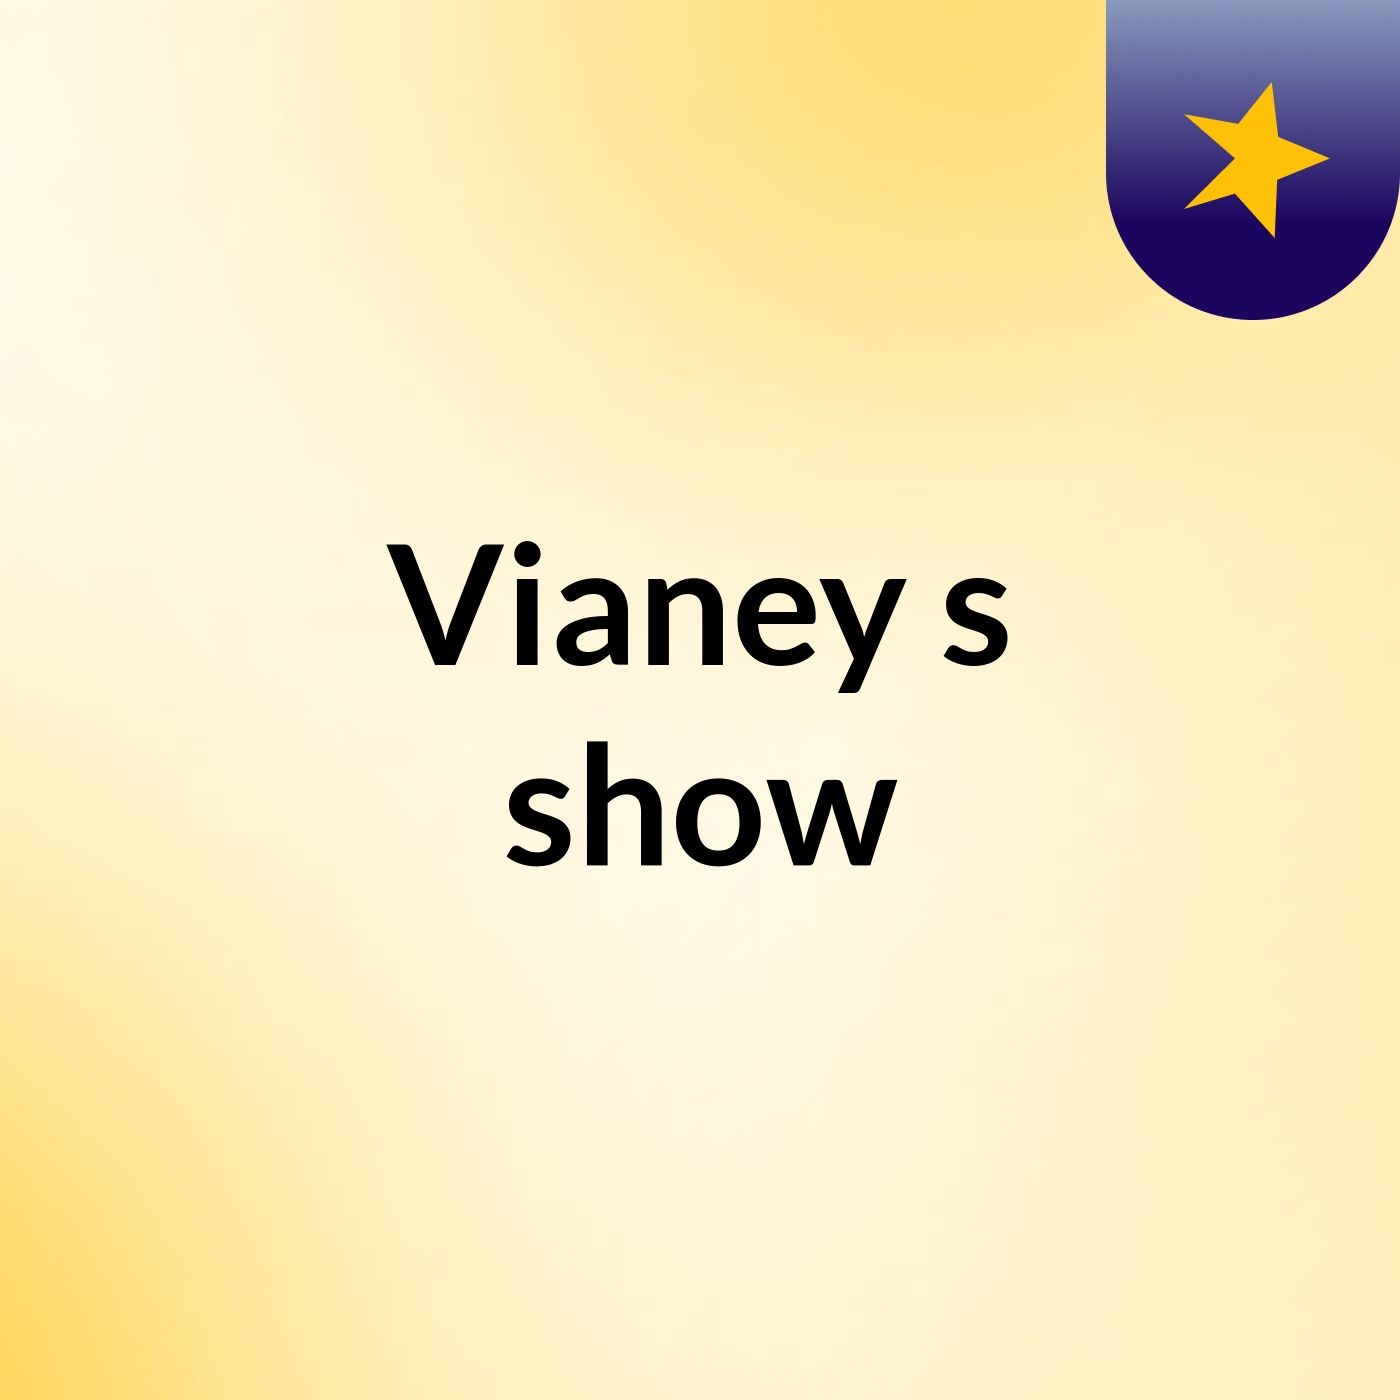 Vianey's show